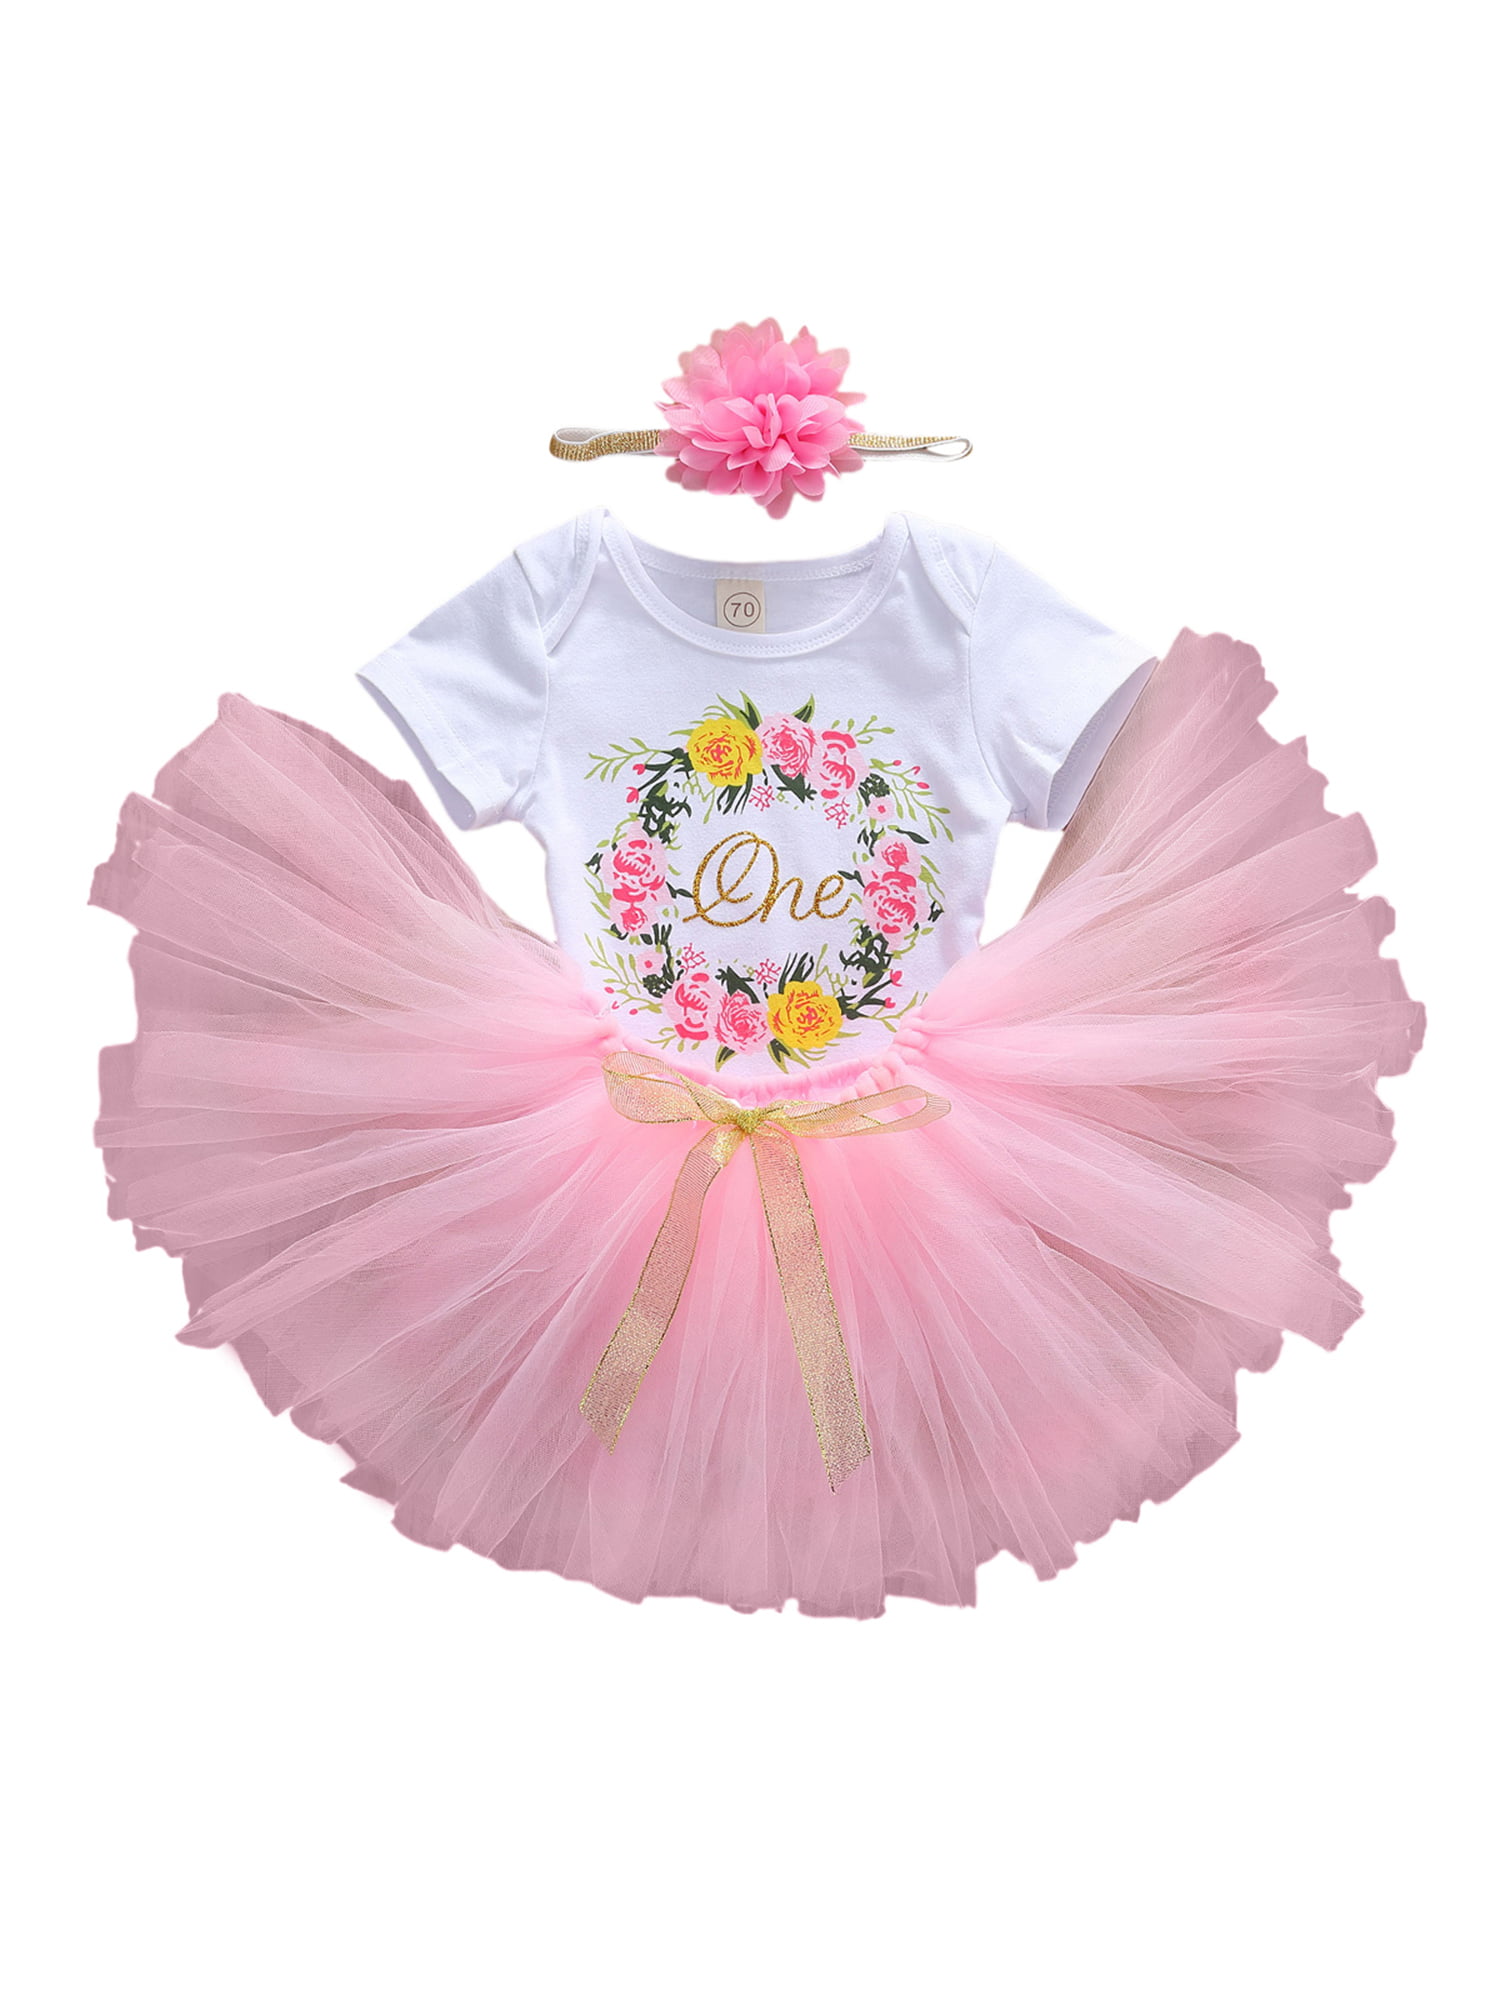 Birthday 1ST Cupcake Cake Bodysuit Light Pink Girls Baby Dress Outfit Set NB-18M 